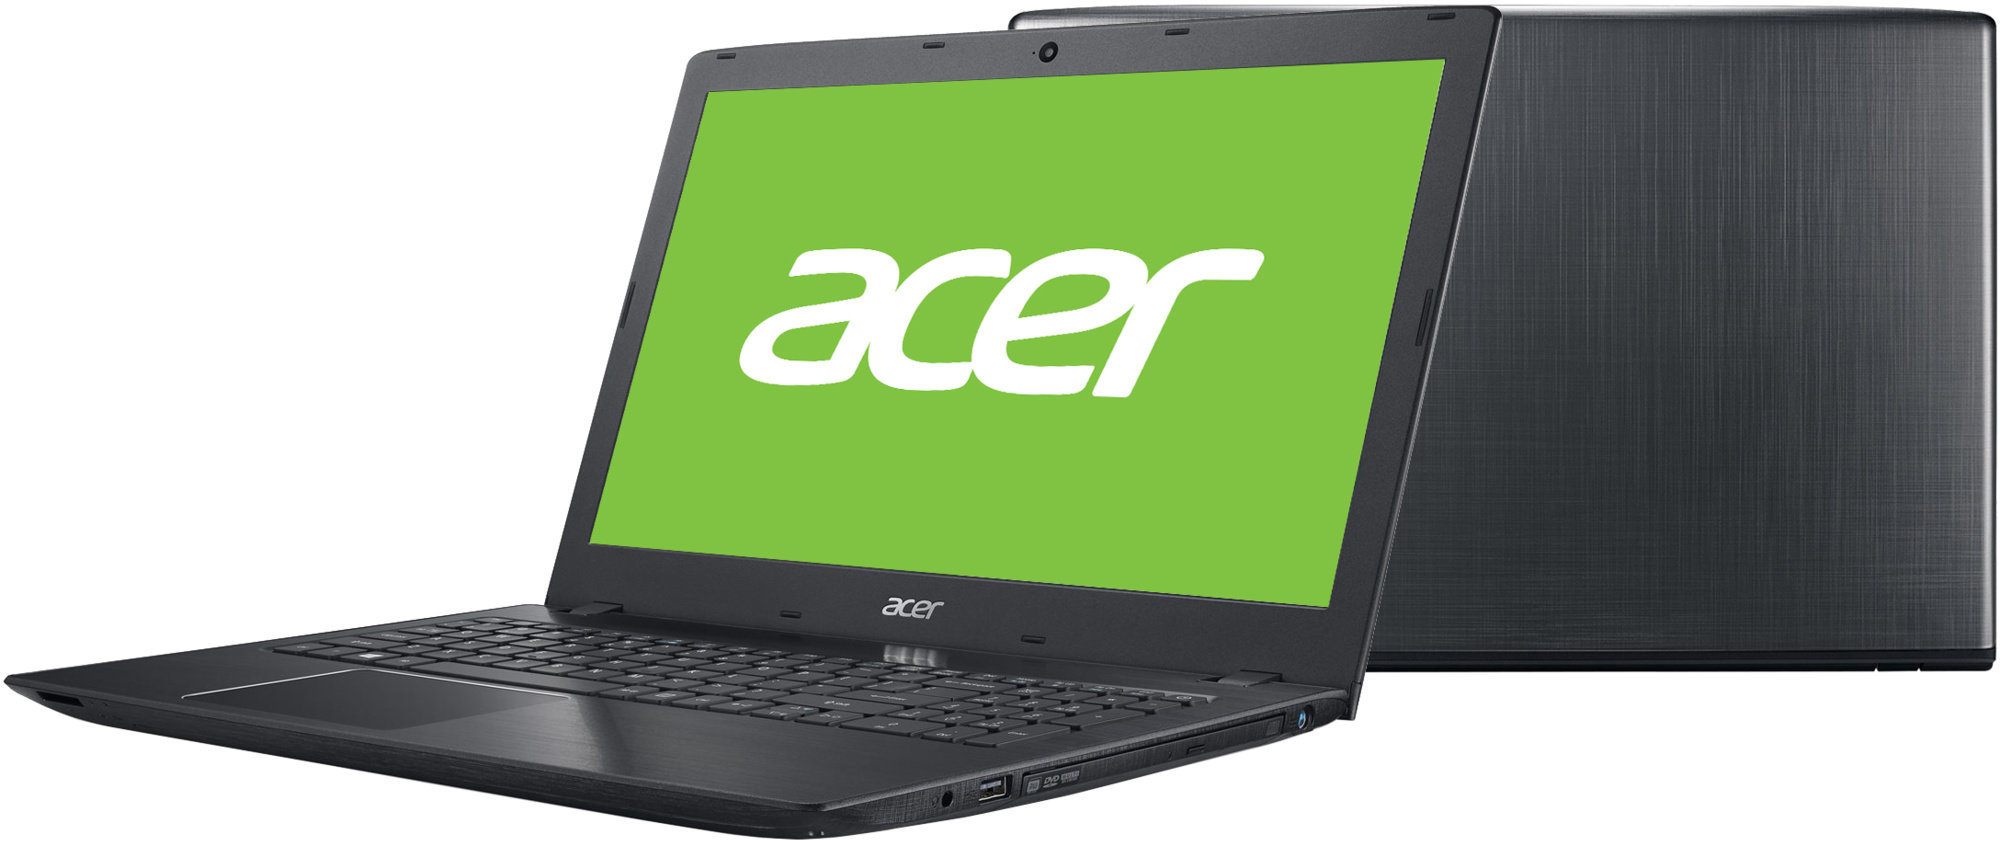 Acer a315-21g. Acer Aspire 3 a315-41g. Acer Aspire e5-575g. Acer Aspire e15 e5-575g.